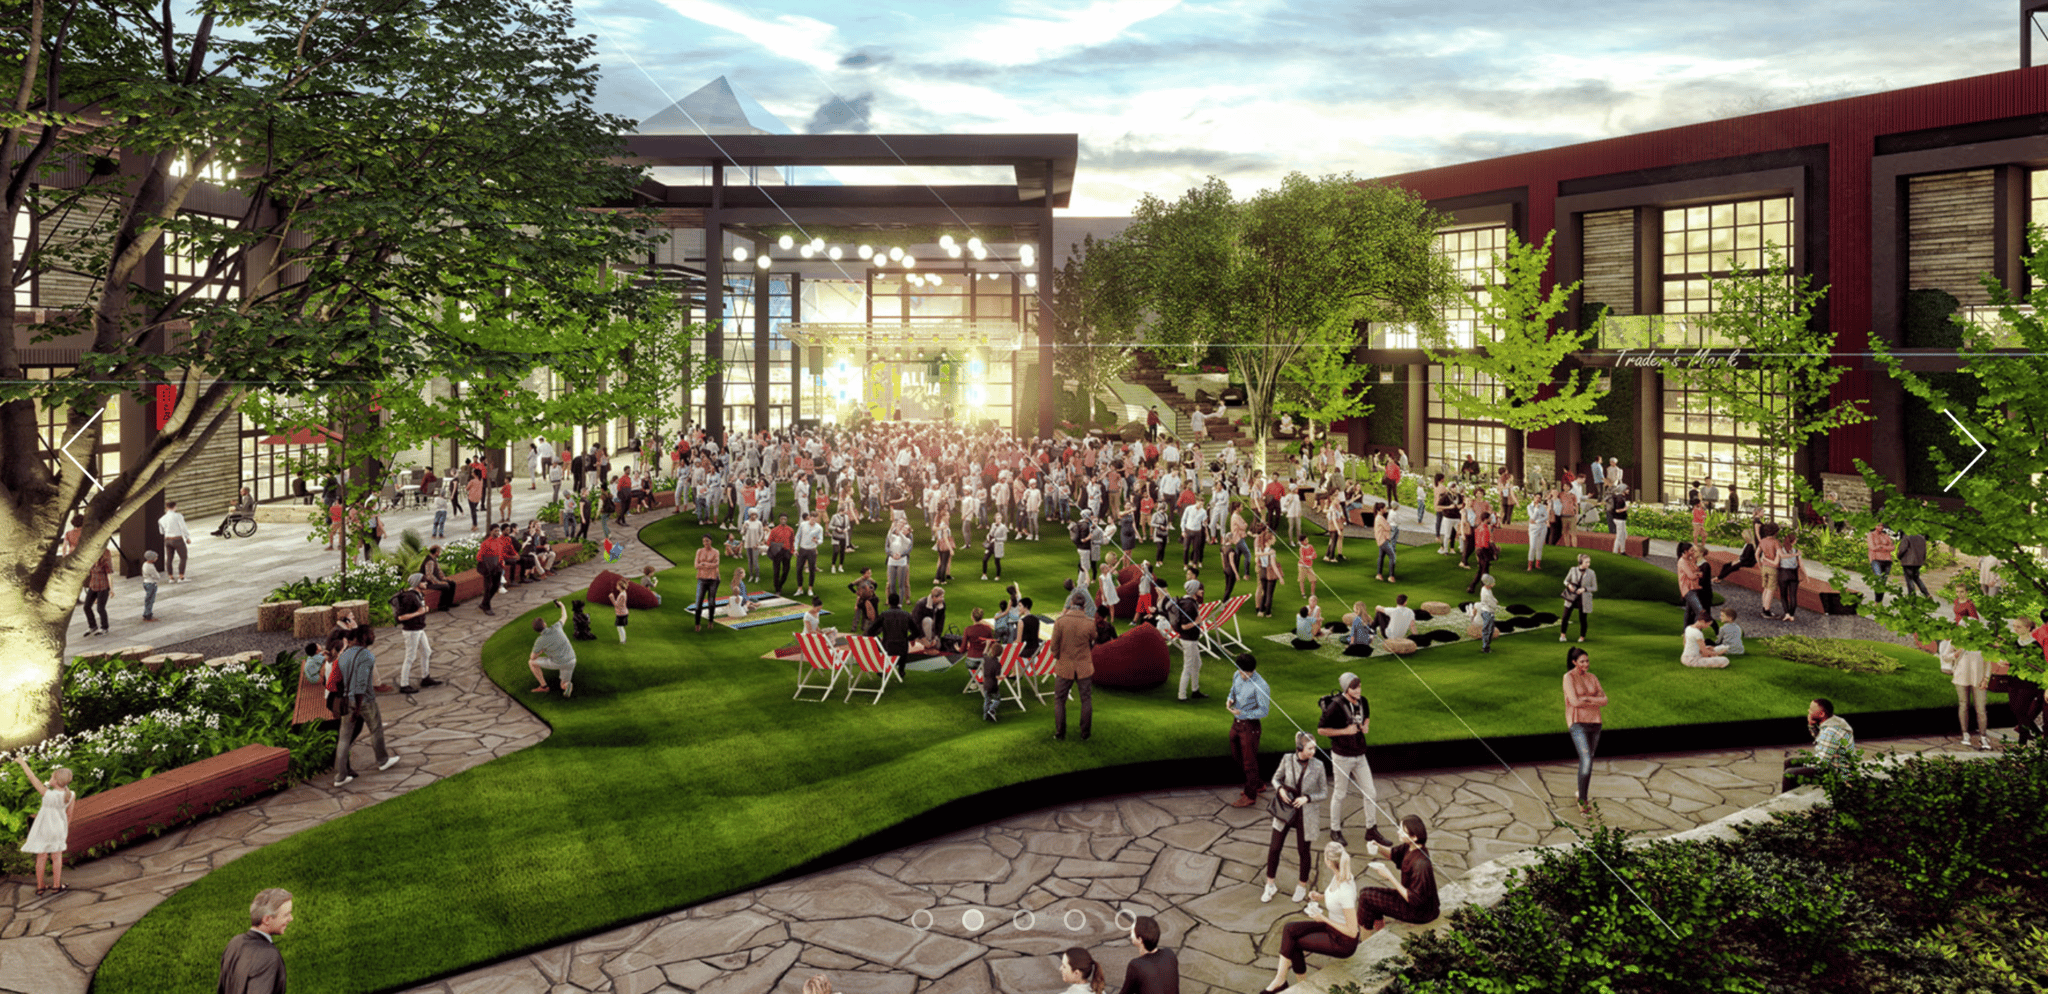 Alpharetta will decide on the North Point Mall redevelopment plan Monday